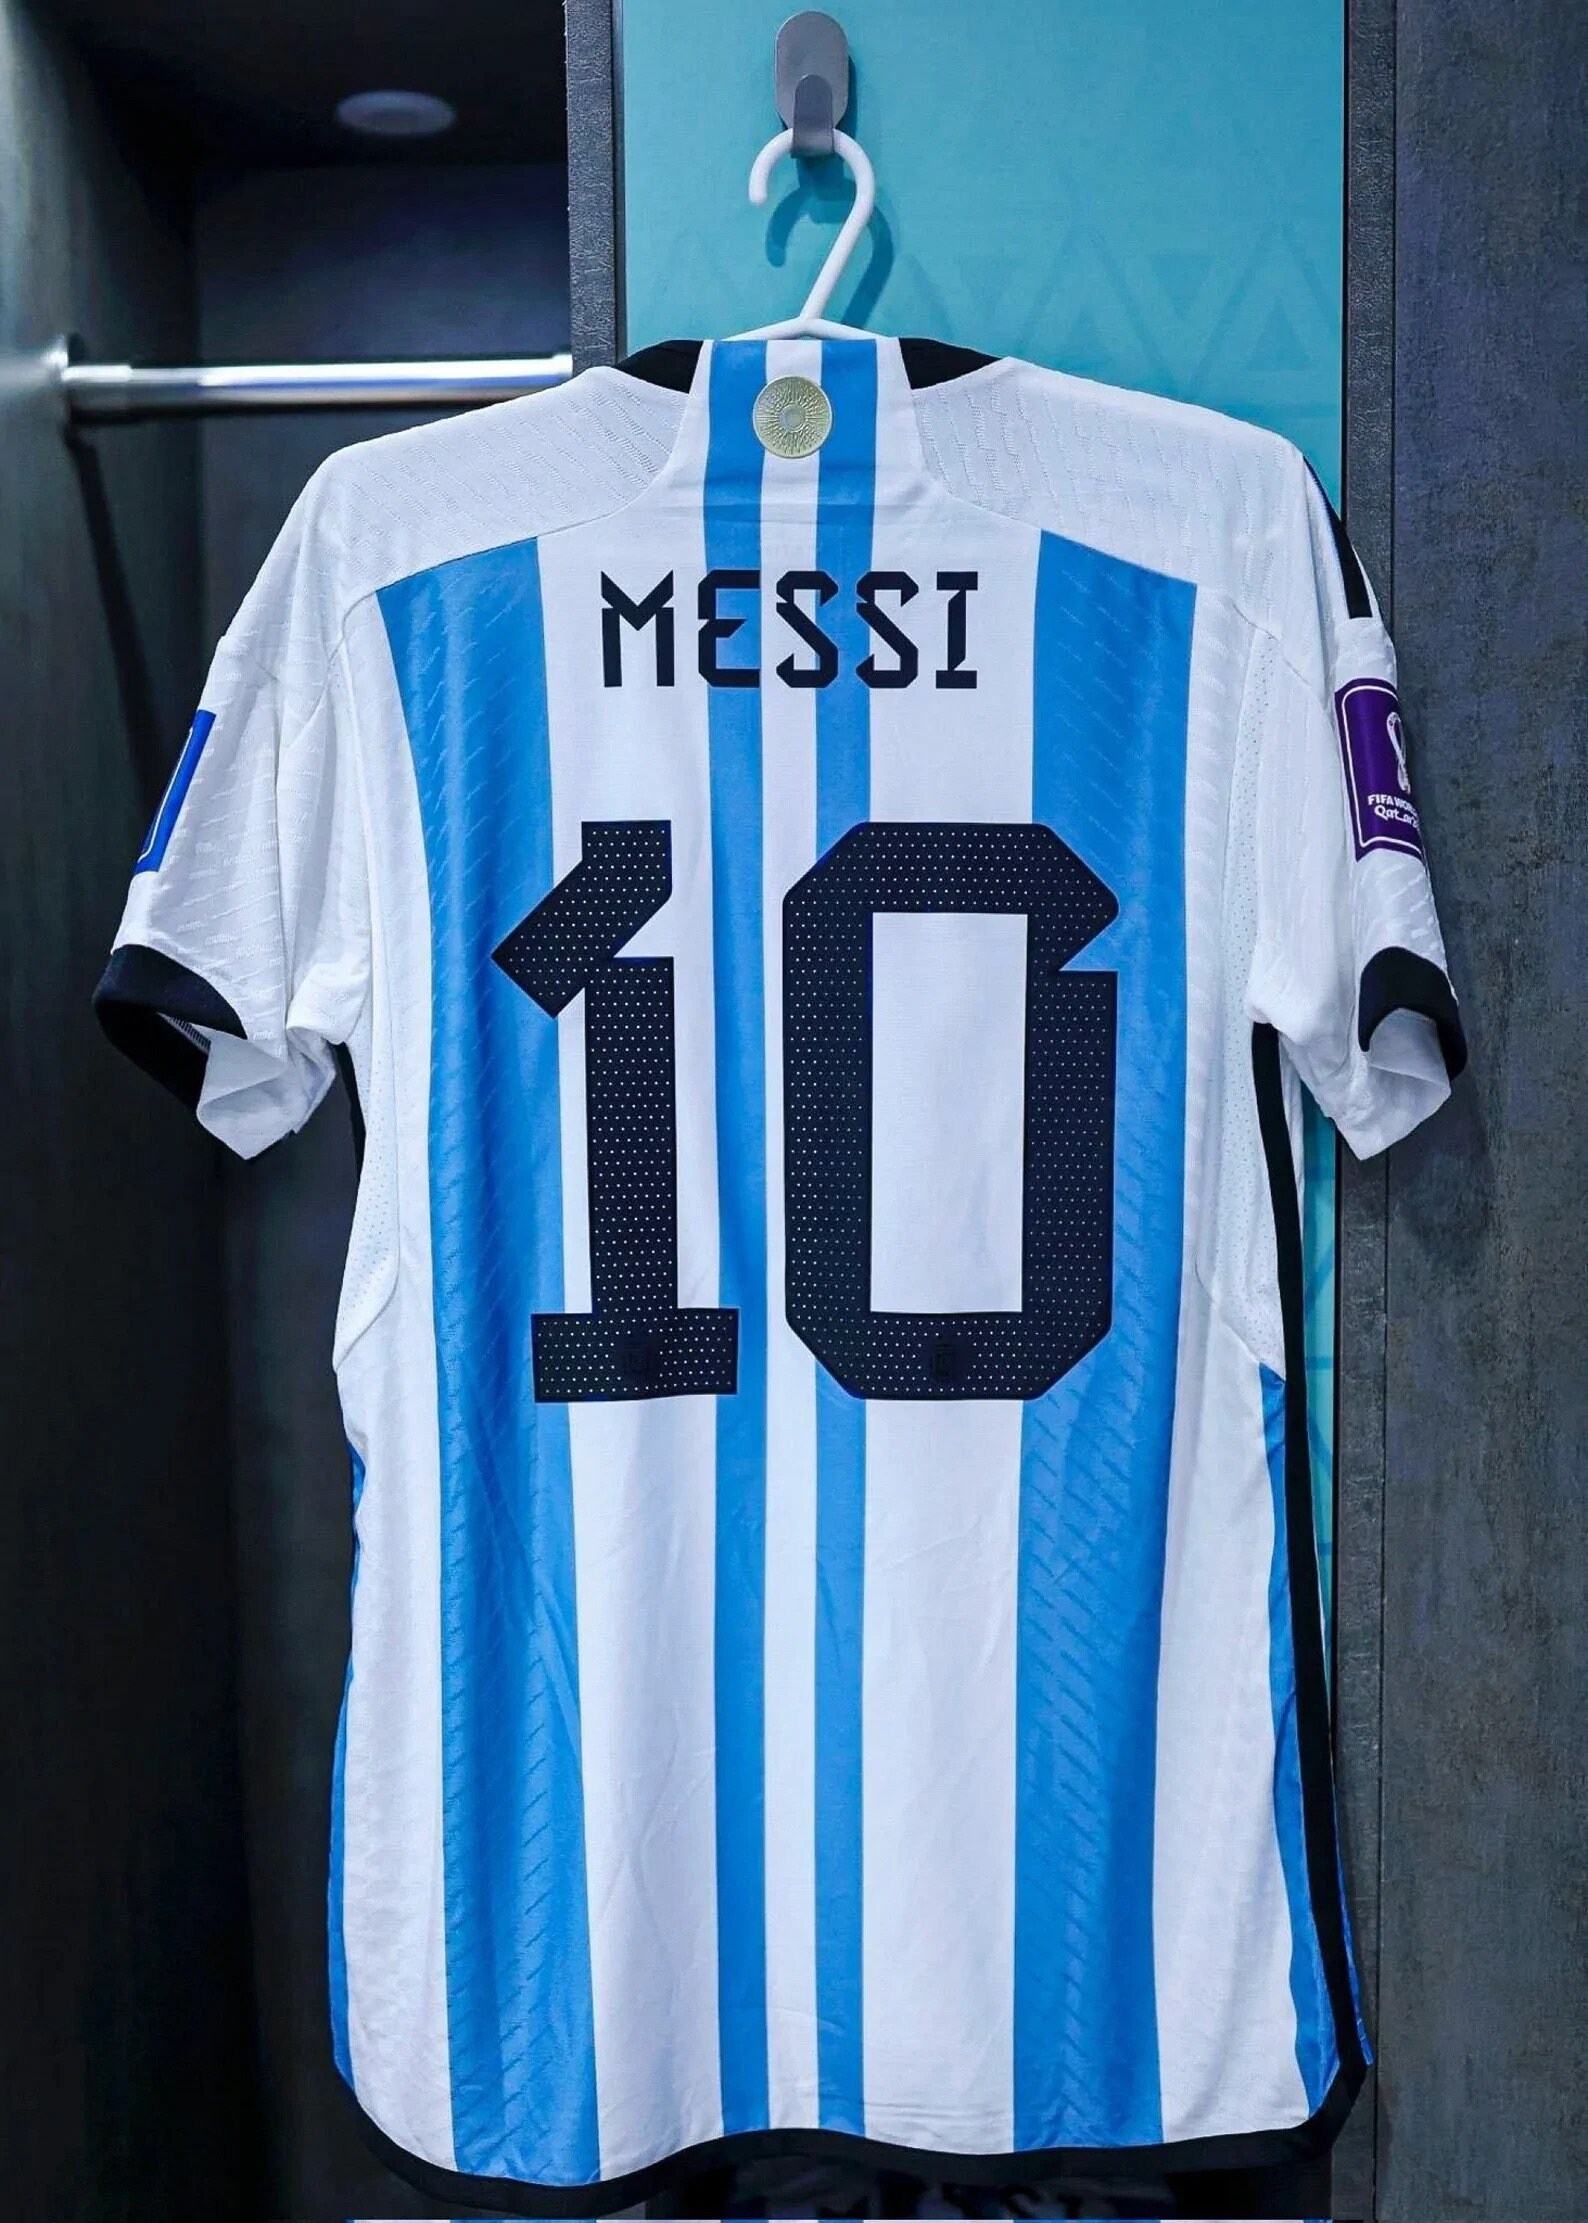 Messi Jersey Argentina Football Jersey